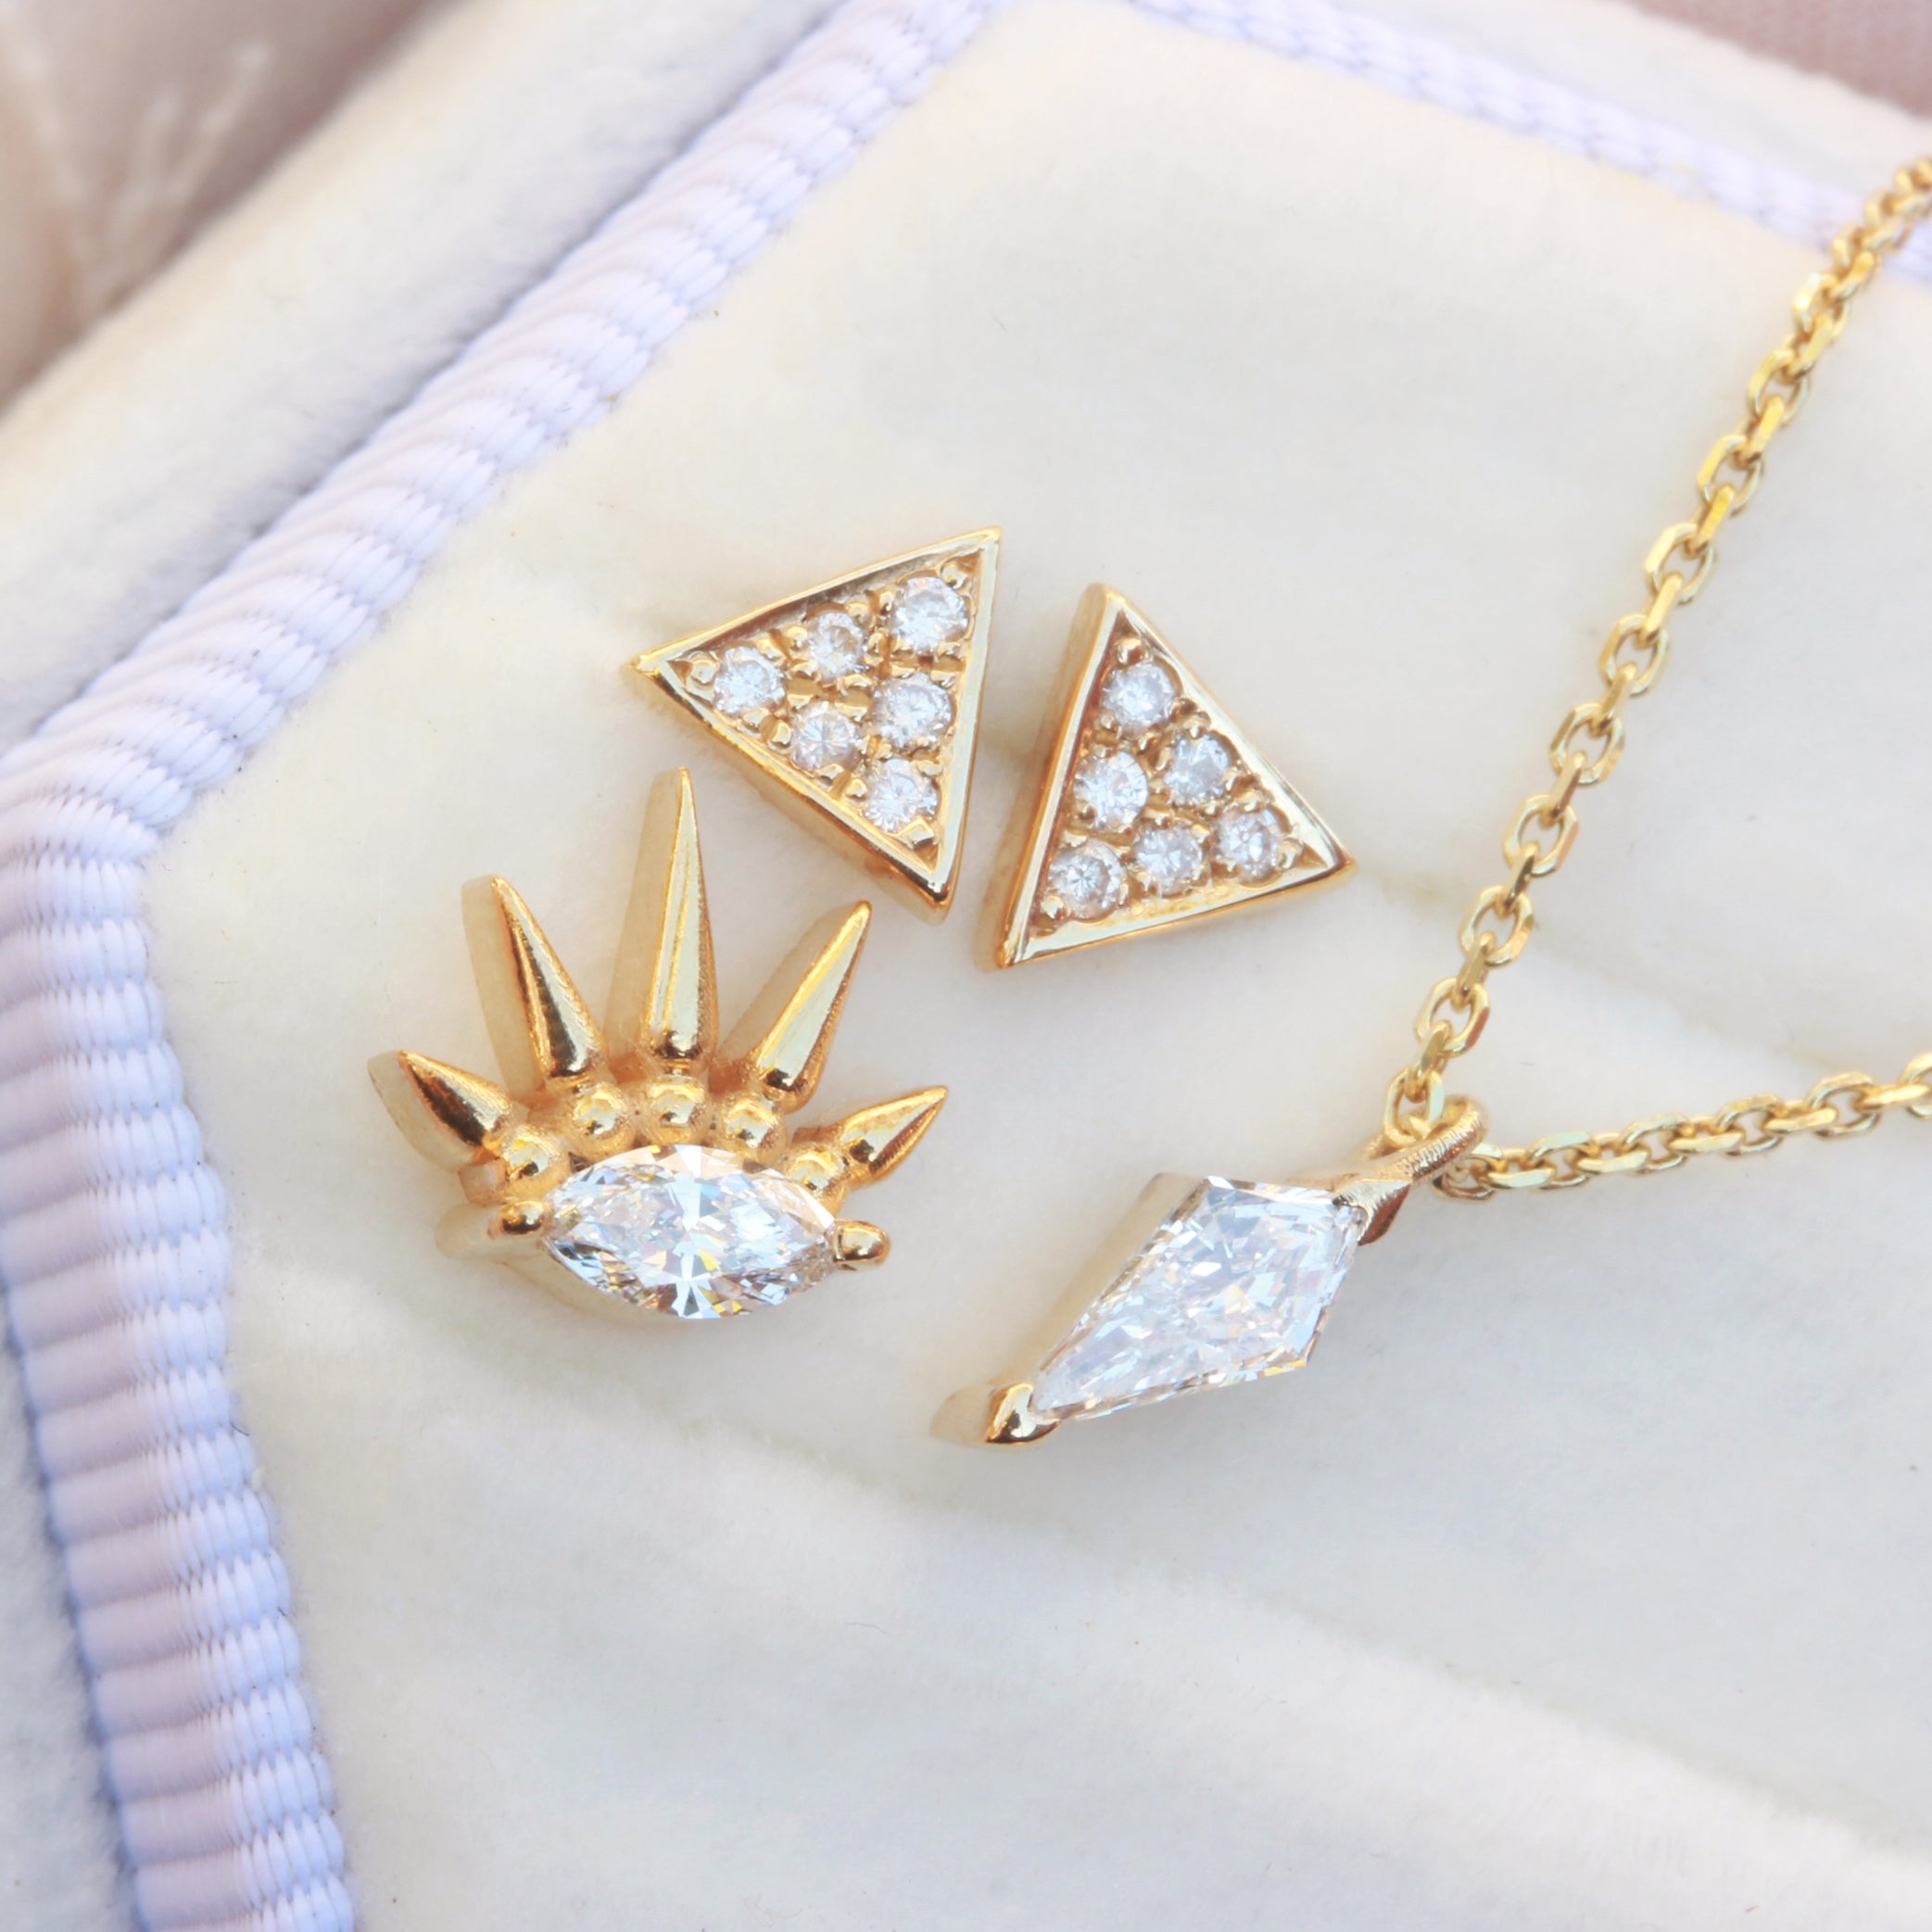 Tiny Triangle Diamonds Stud Earrings